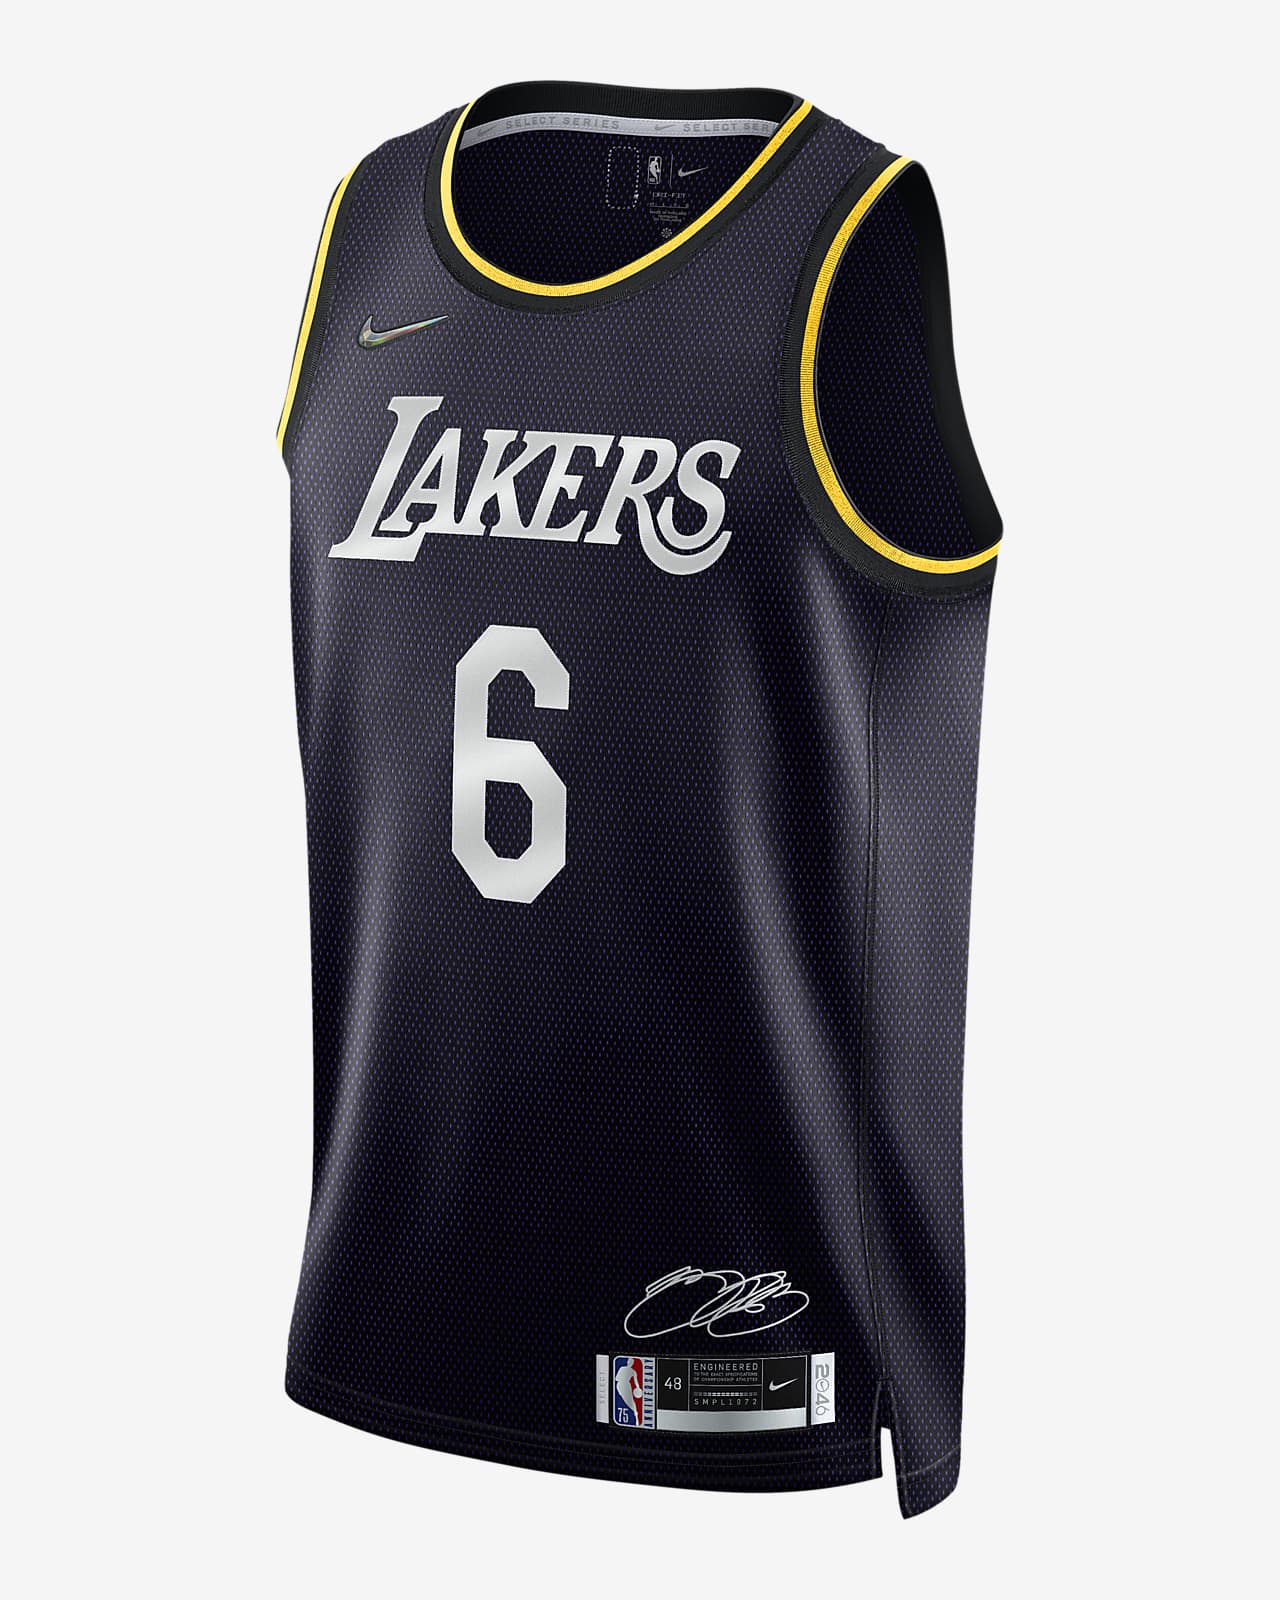 Camiseta Lebron James Lakers Online, Save |